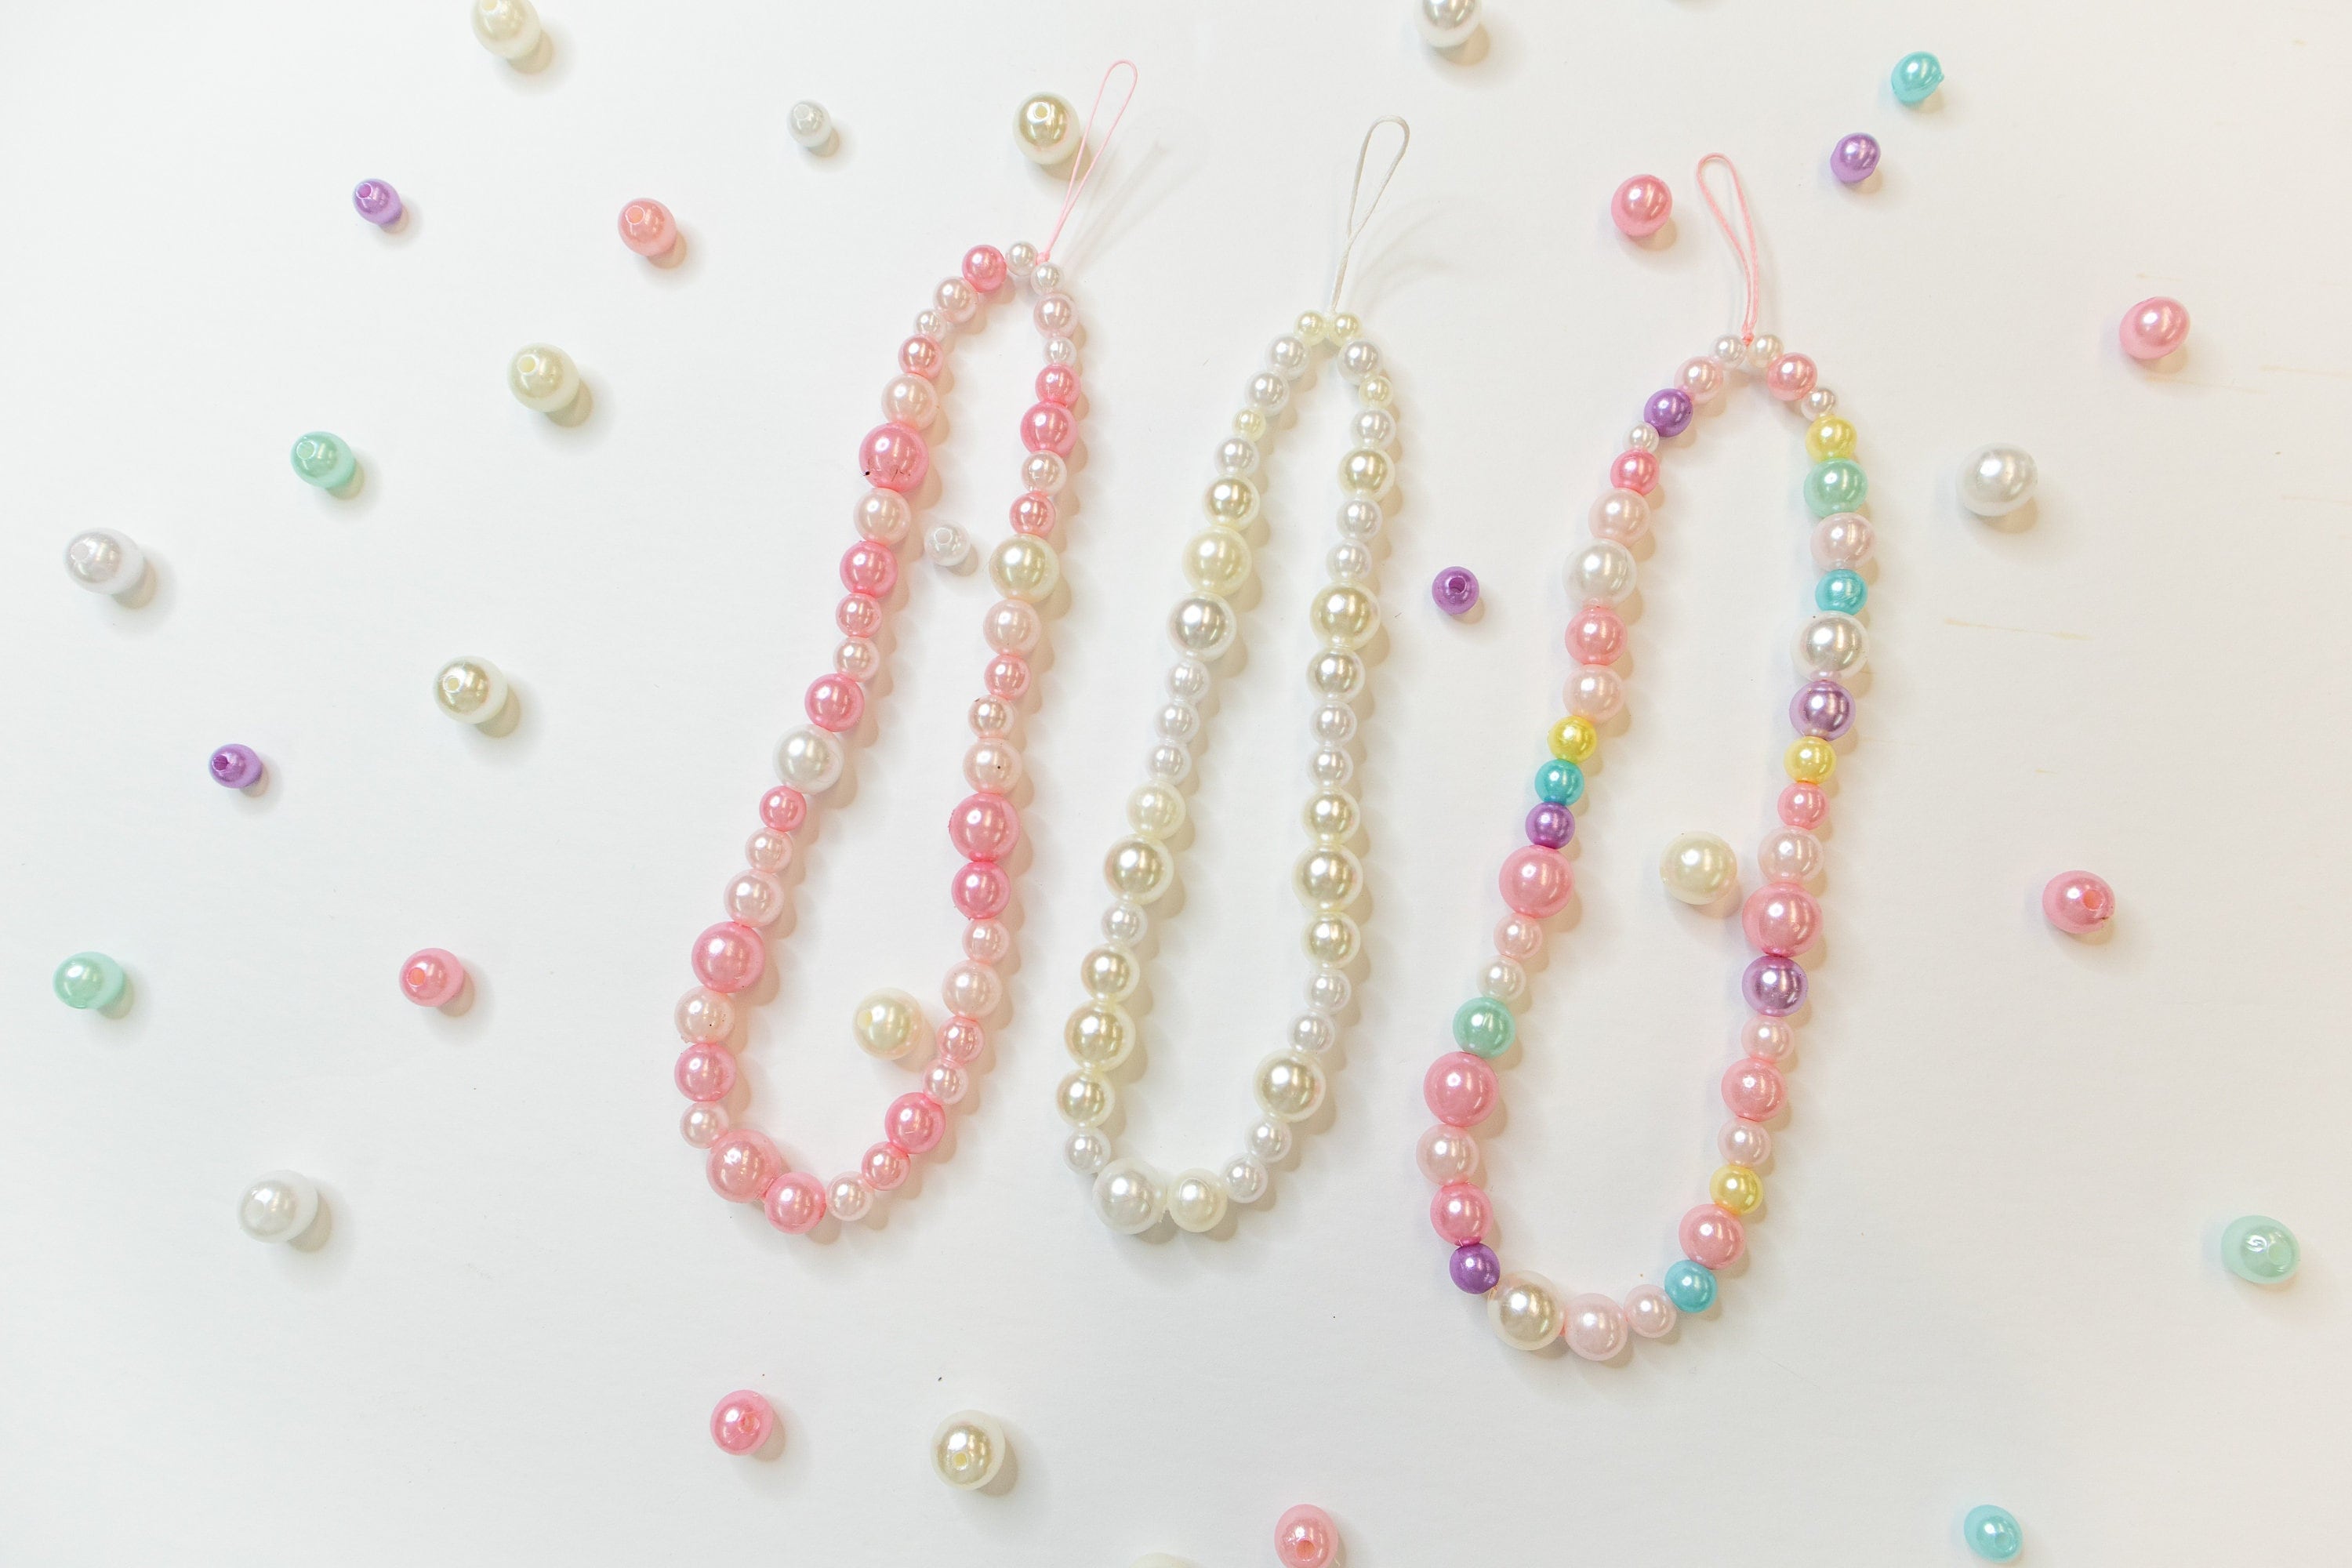  Xiazw Elegant Bead Pearl Handle Strap Chain Charms